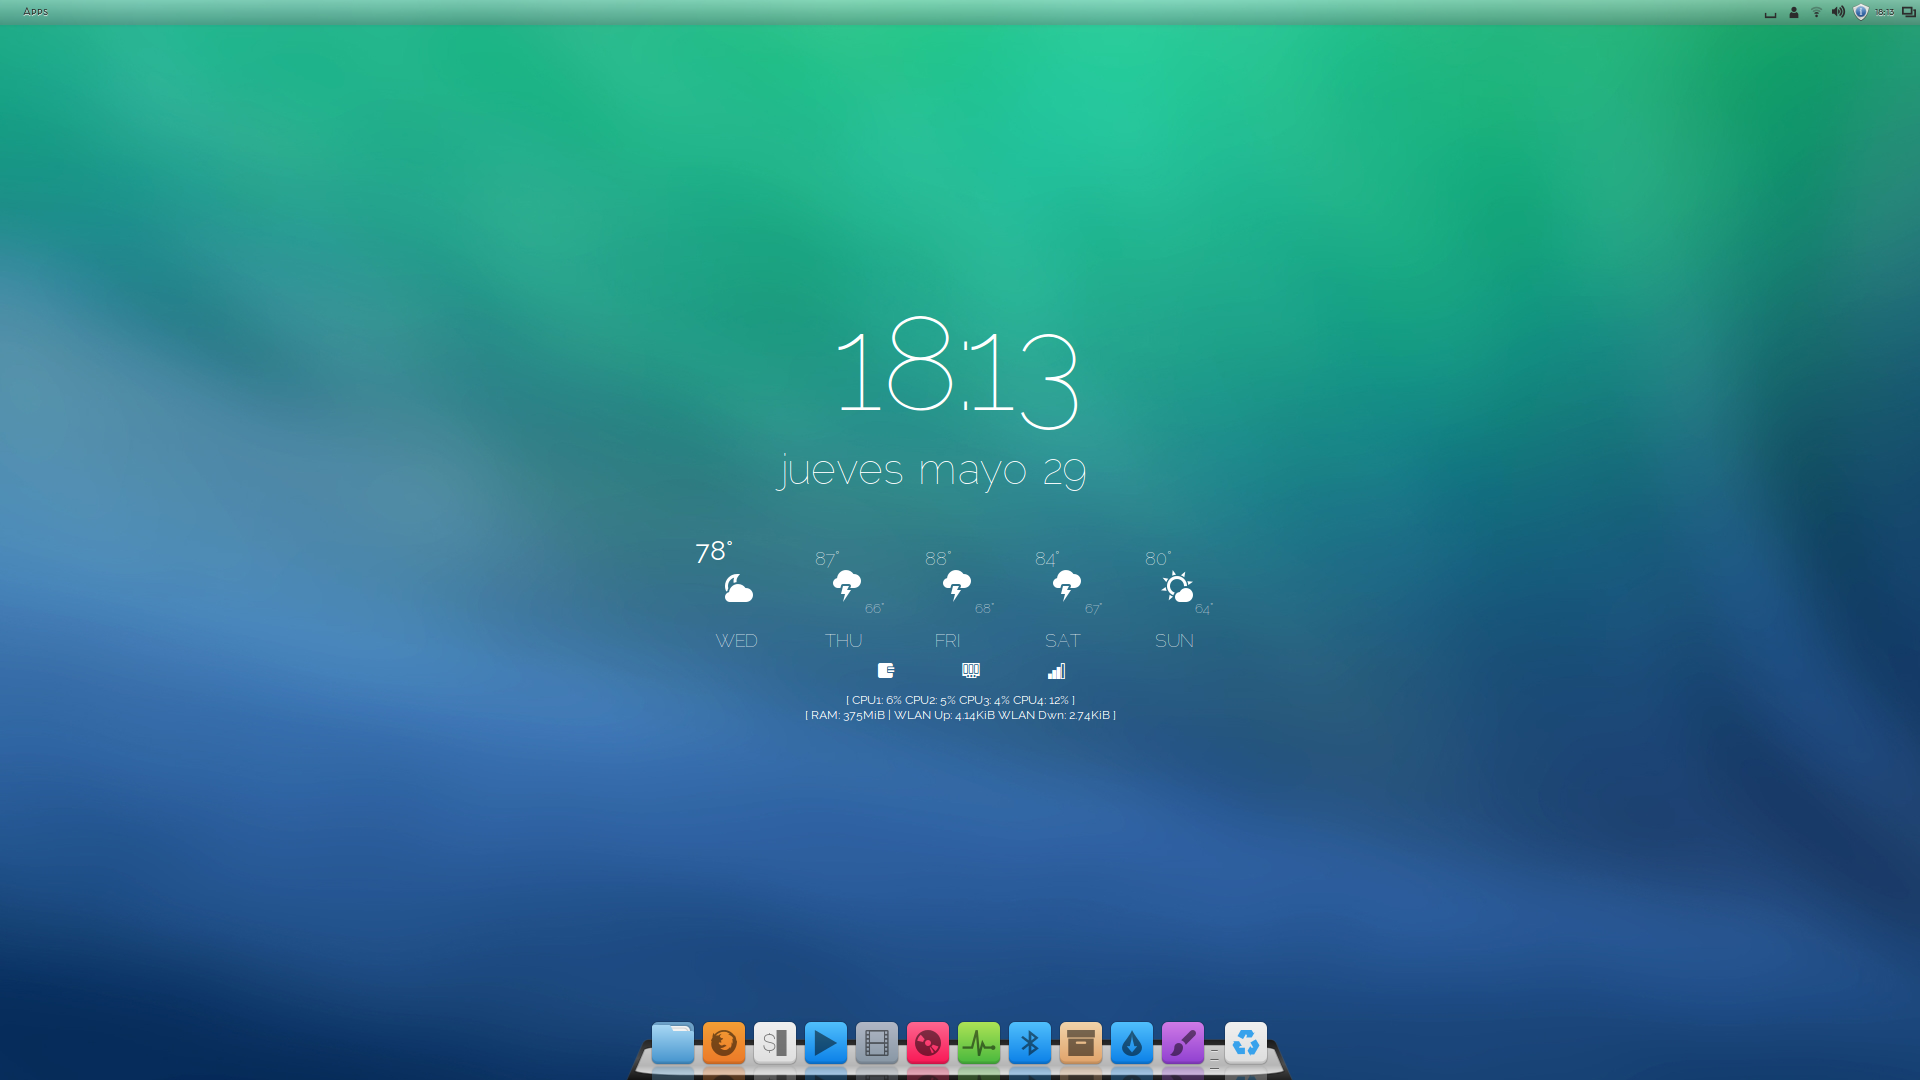 Desktop] Linux Mint 17 Cinnamon